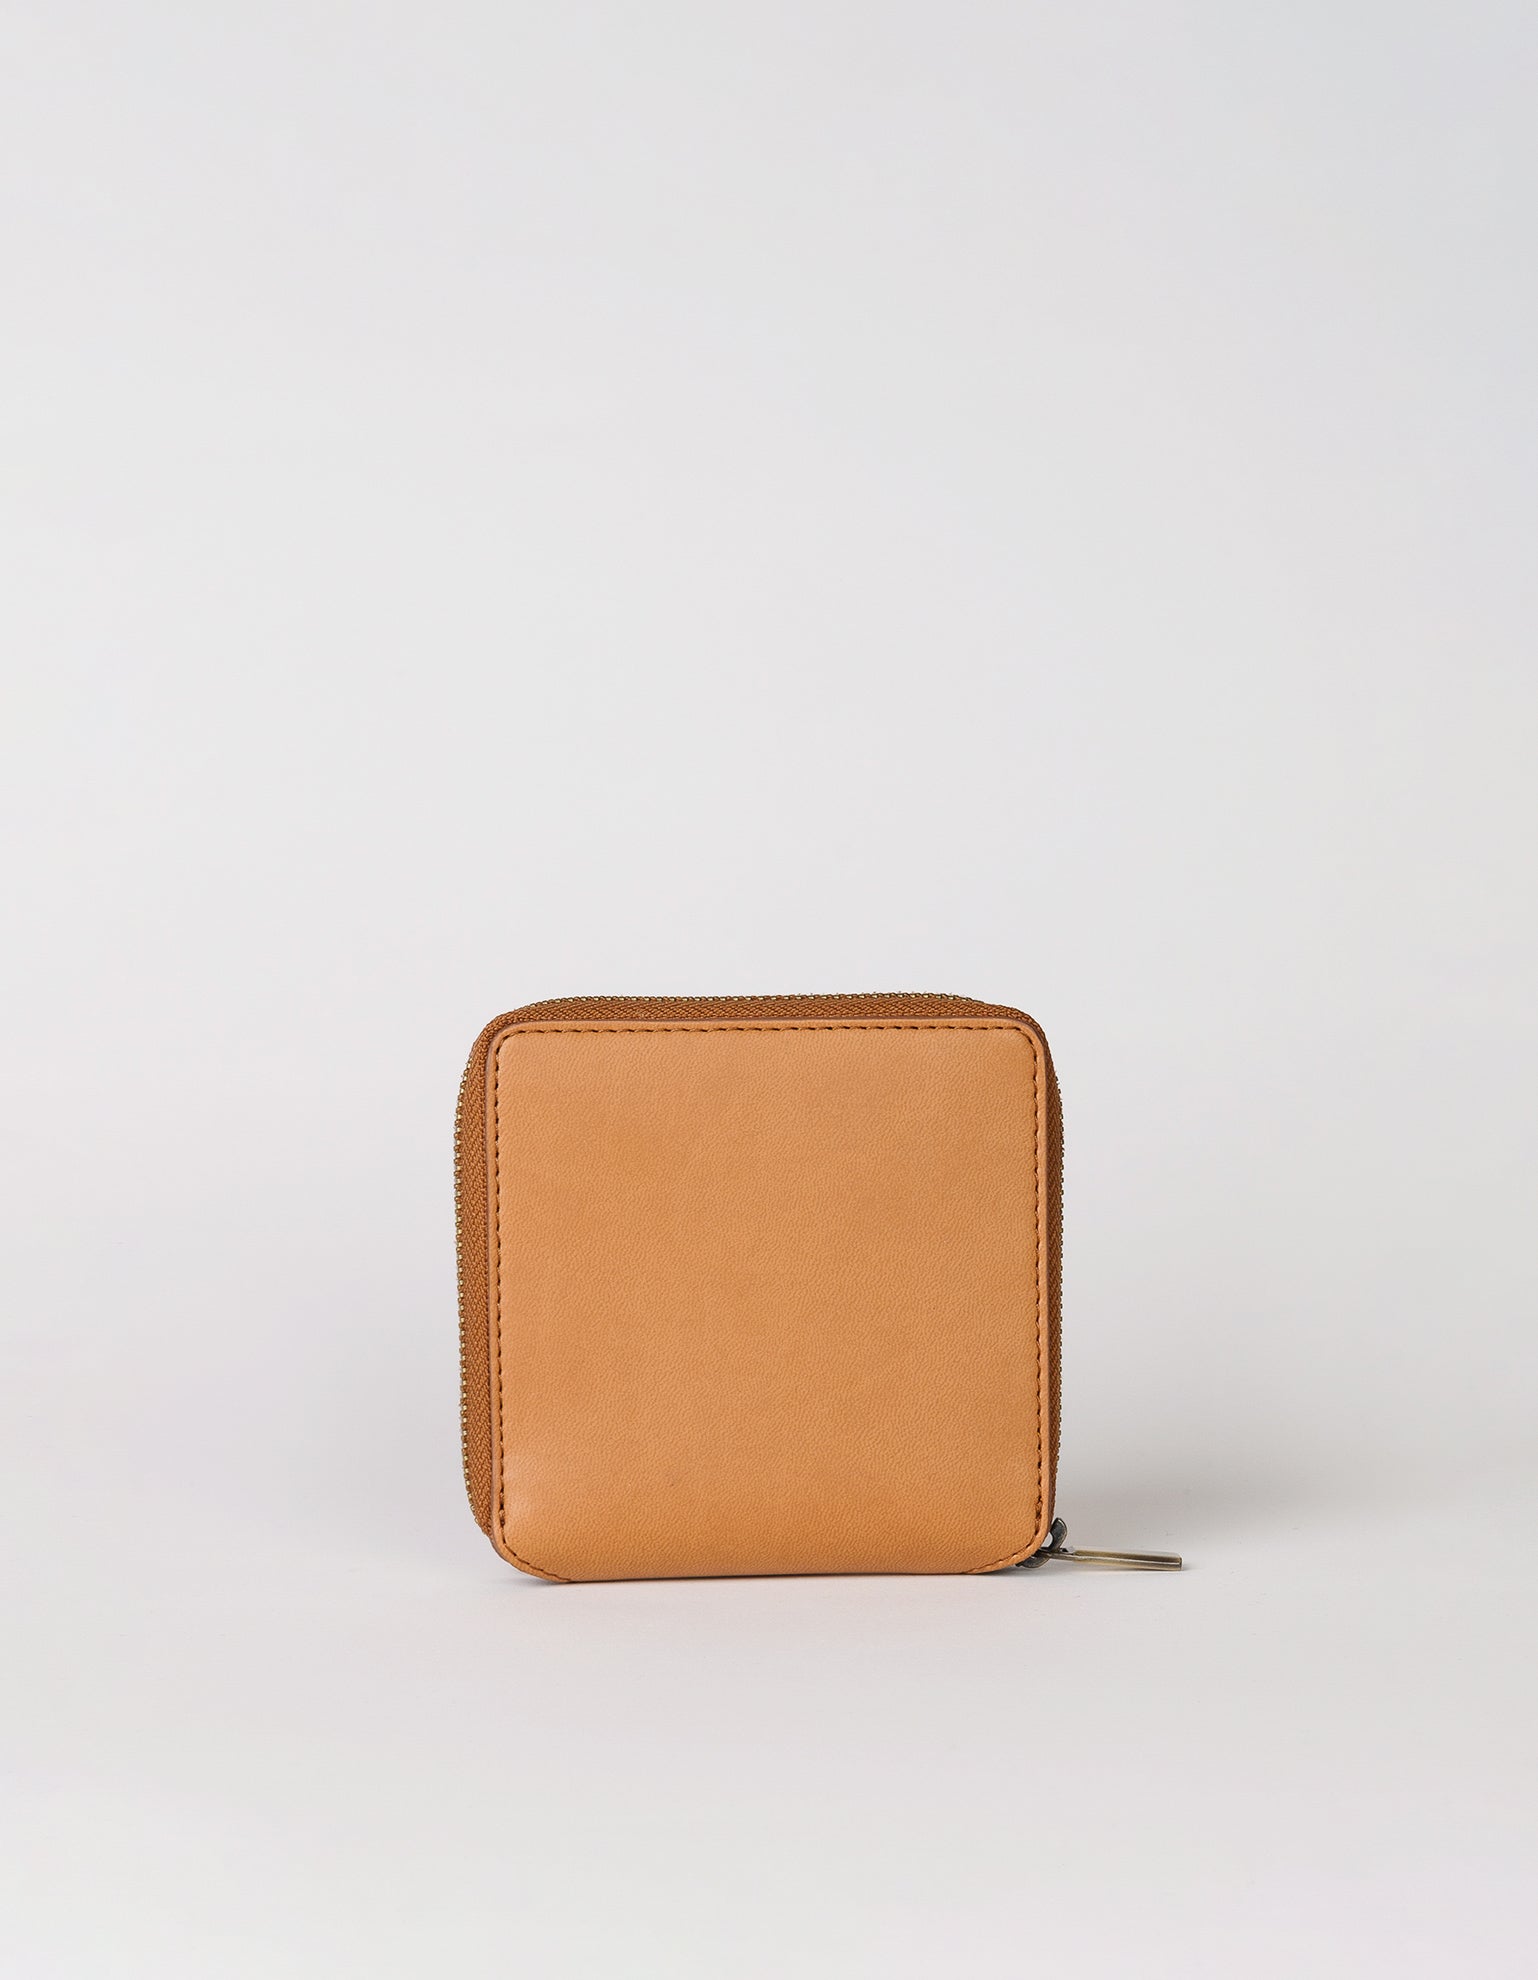 Sonny Square Wallet - Cognac Apple Leather - back product image